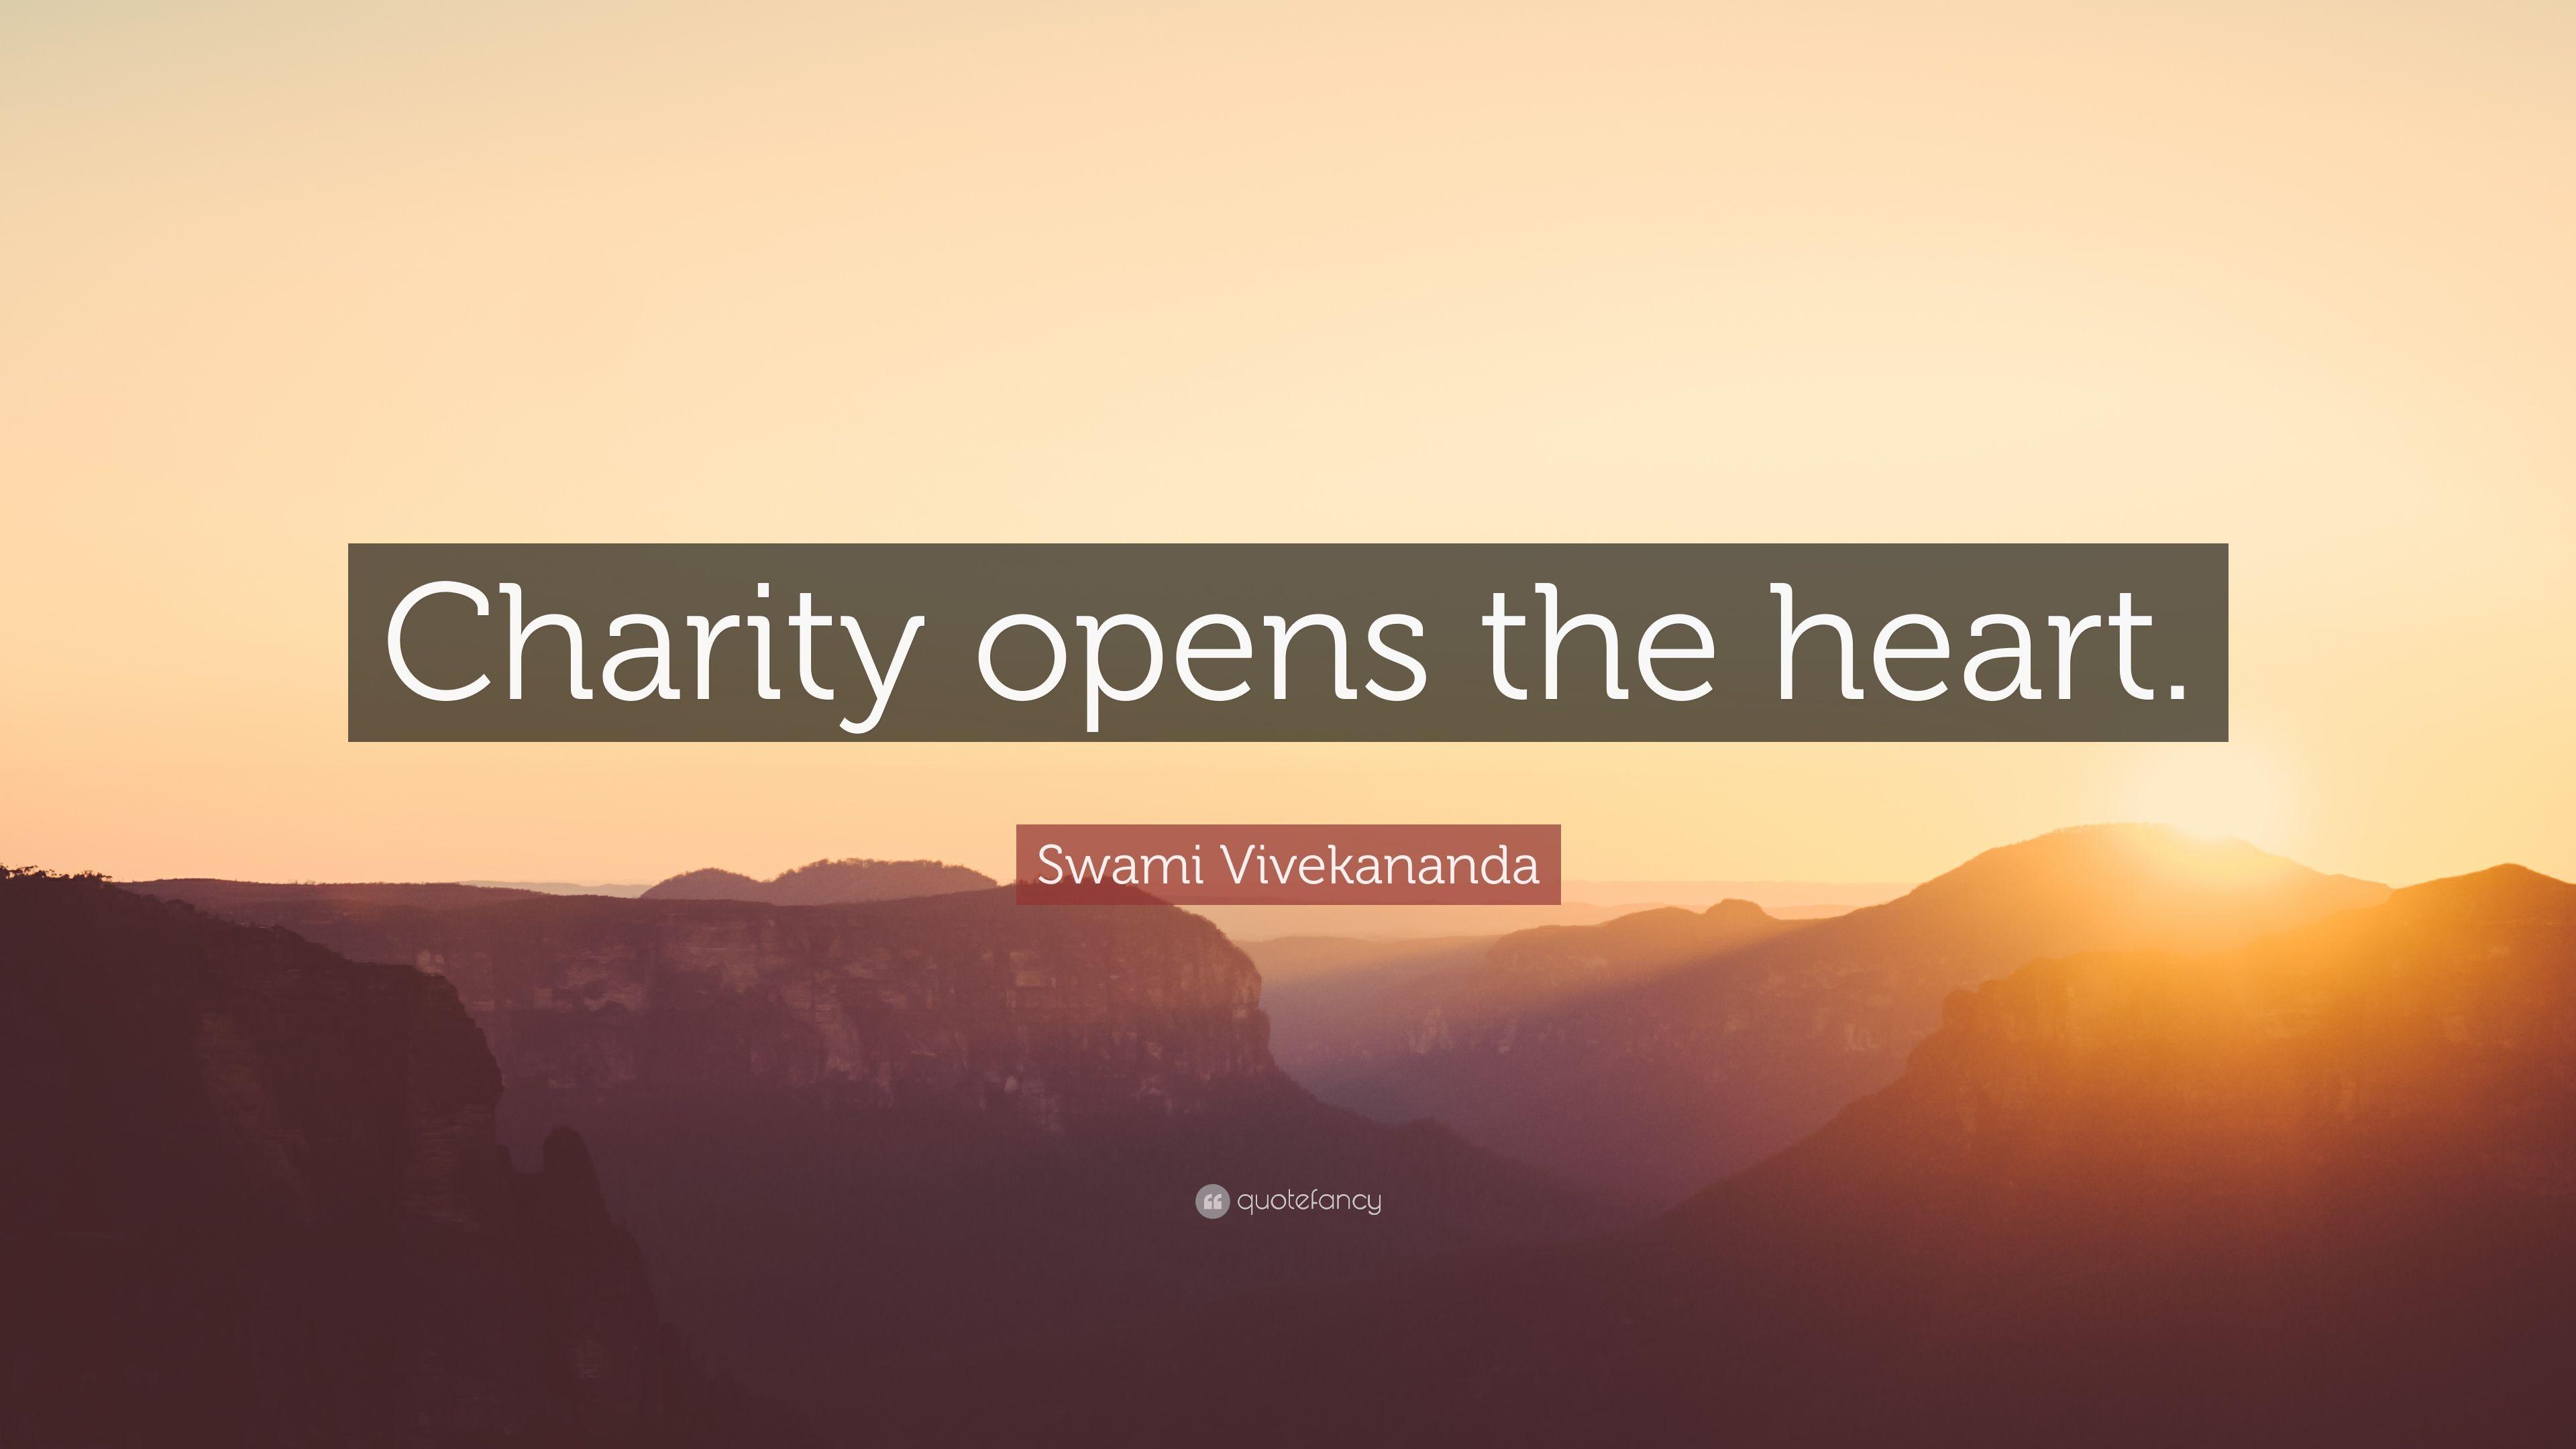 Swami Vivekananda Quote: “Charity opens the heart.” 12 wallpaper